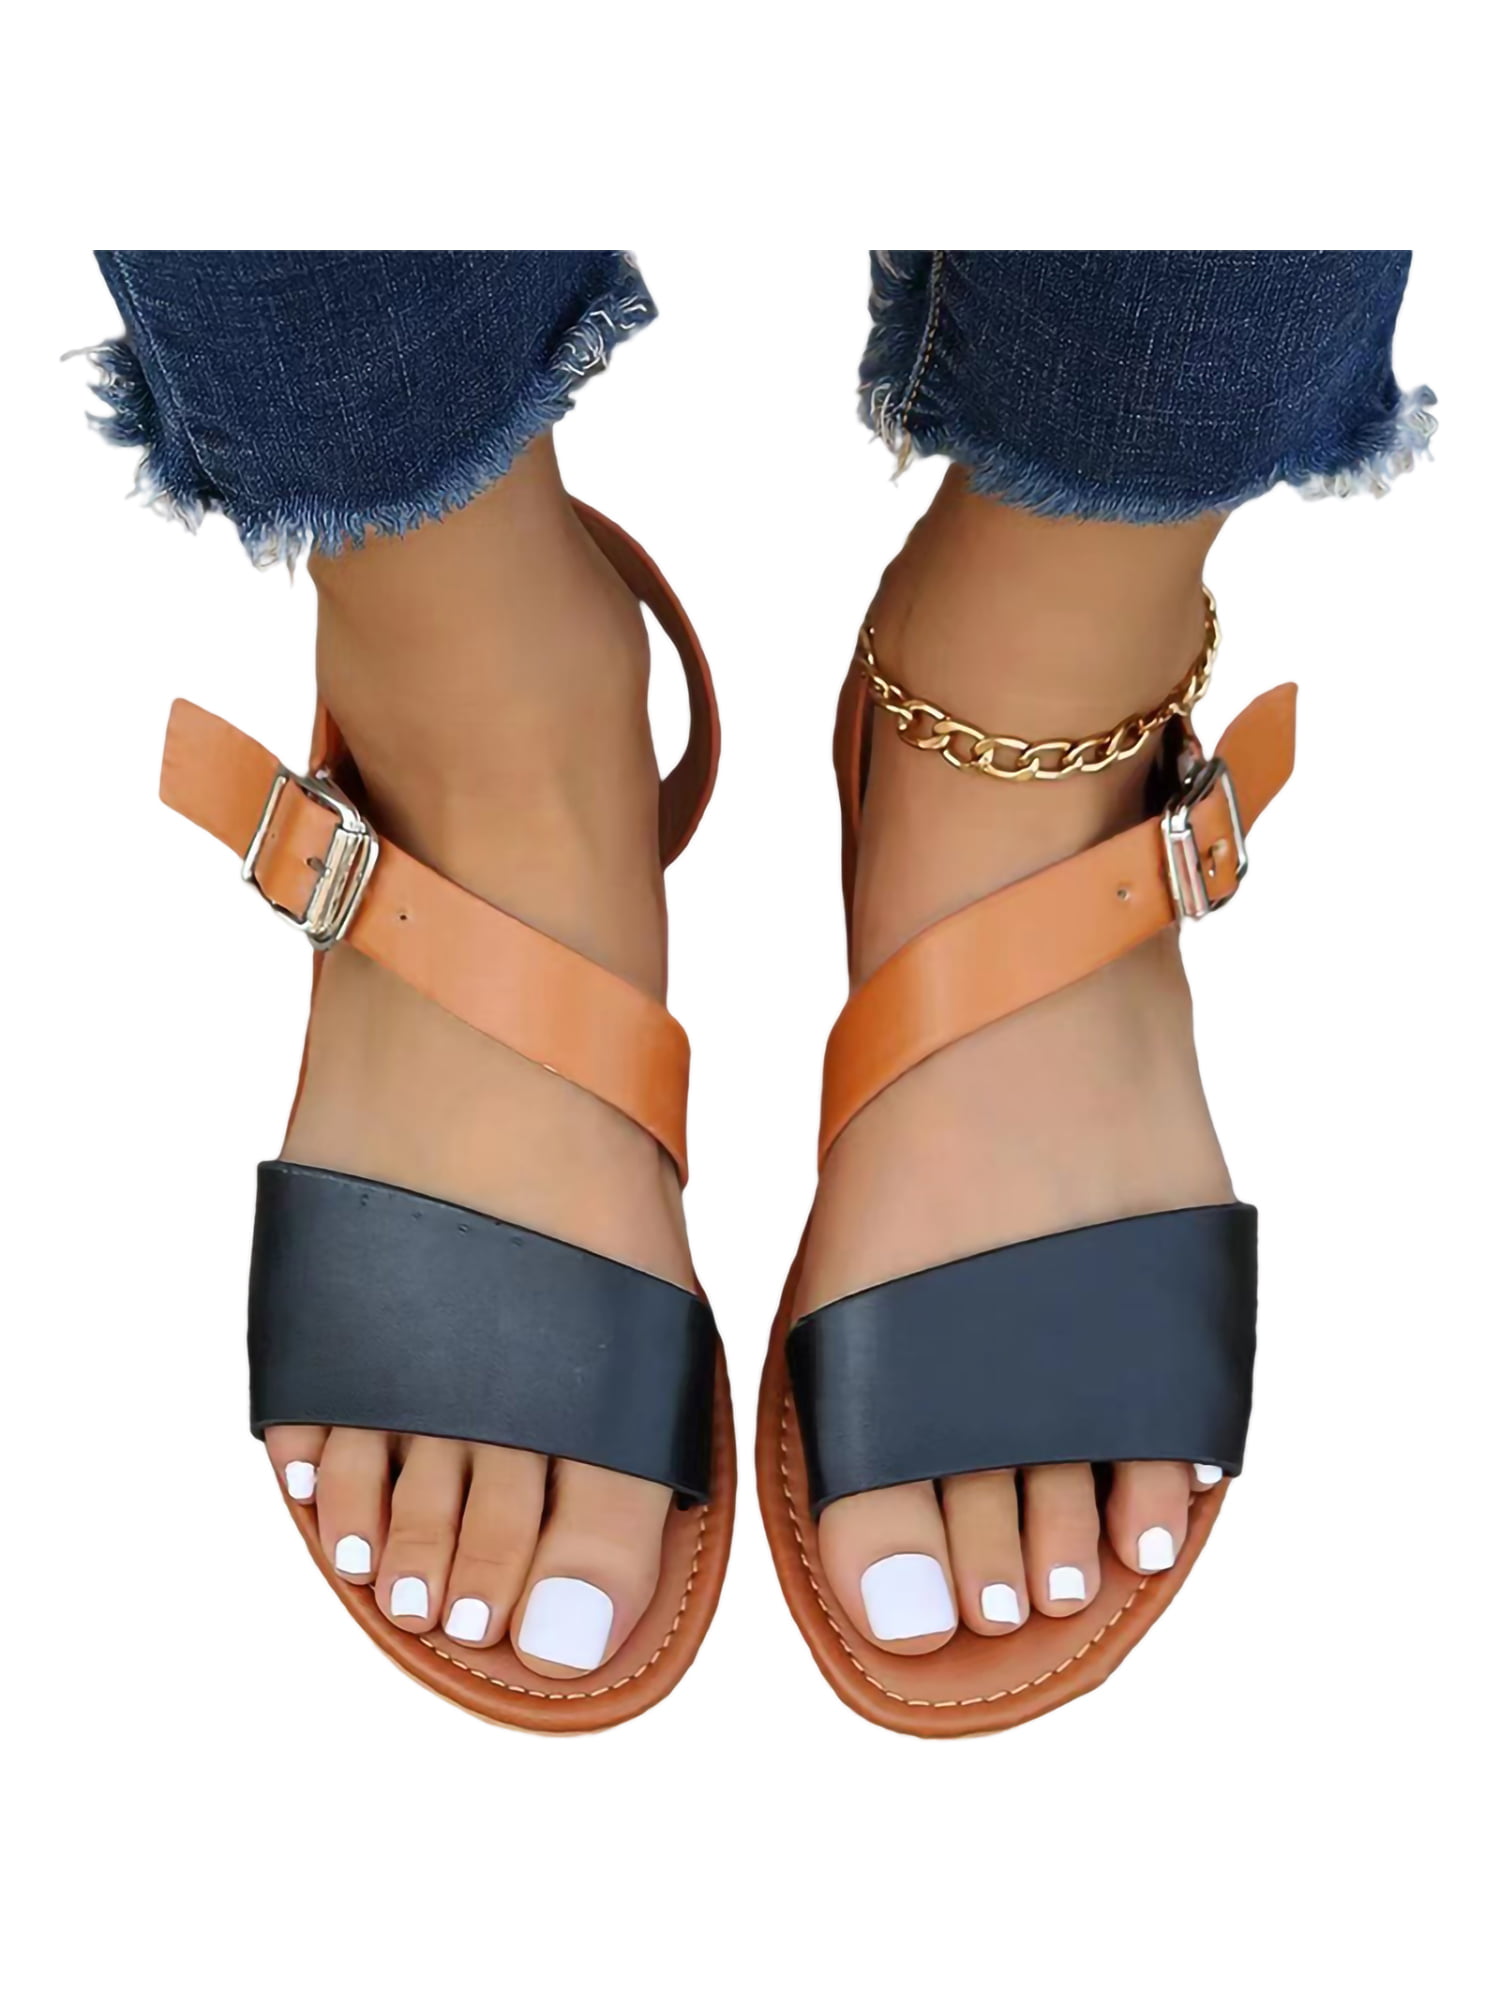 Women's Flat Sandals Comfortable Ankle Strap Buckle Summer Beach Summer Shoes